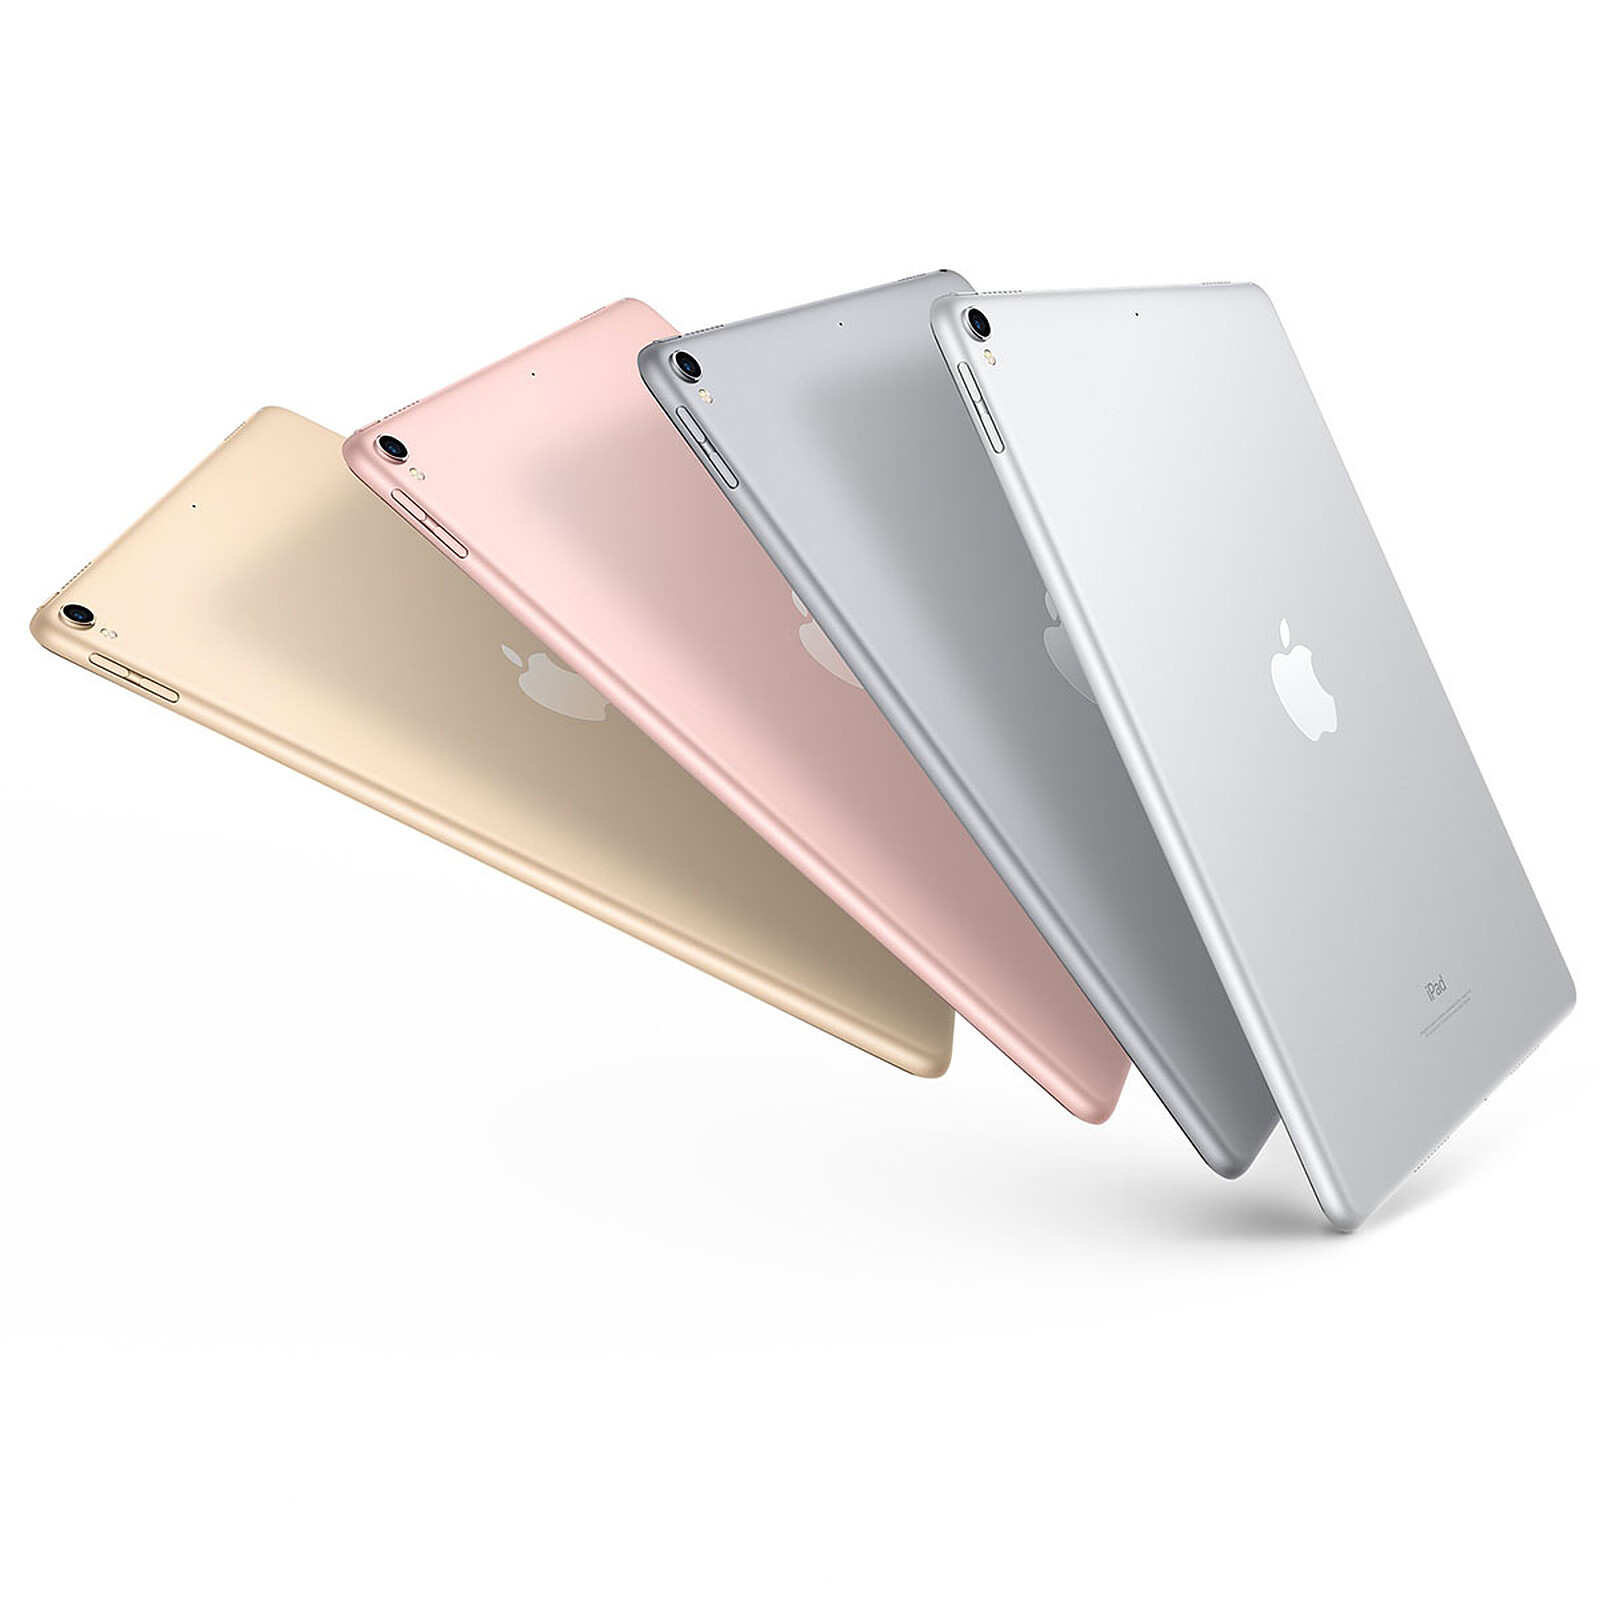 Apple iPad Pro 10.5 inch 64GB Wi-Fi + Cellular Space Grey - Tablet